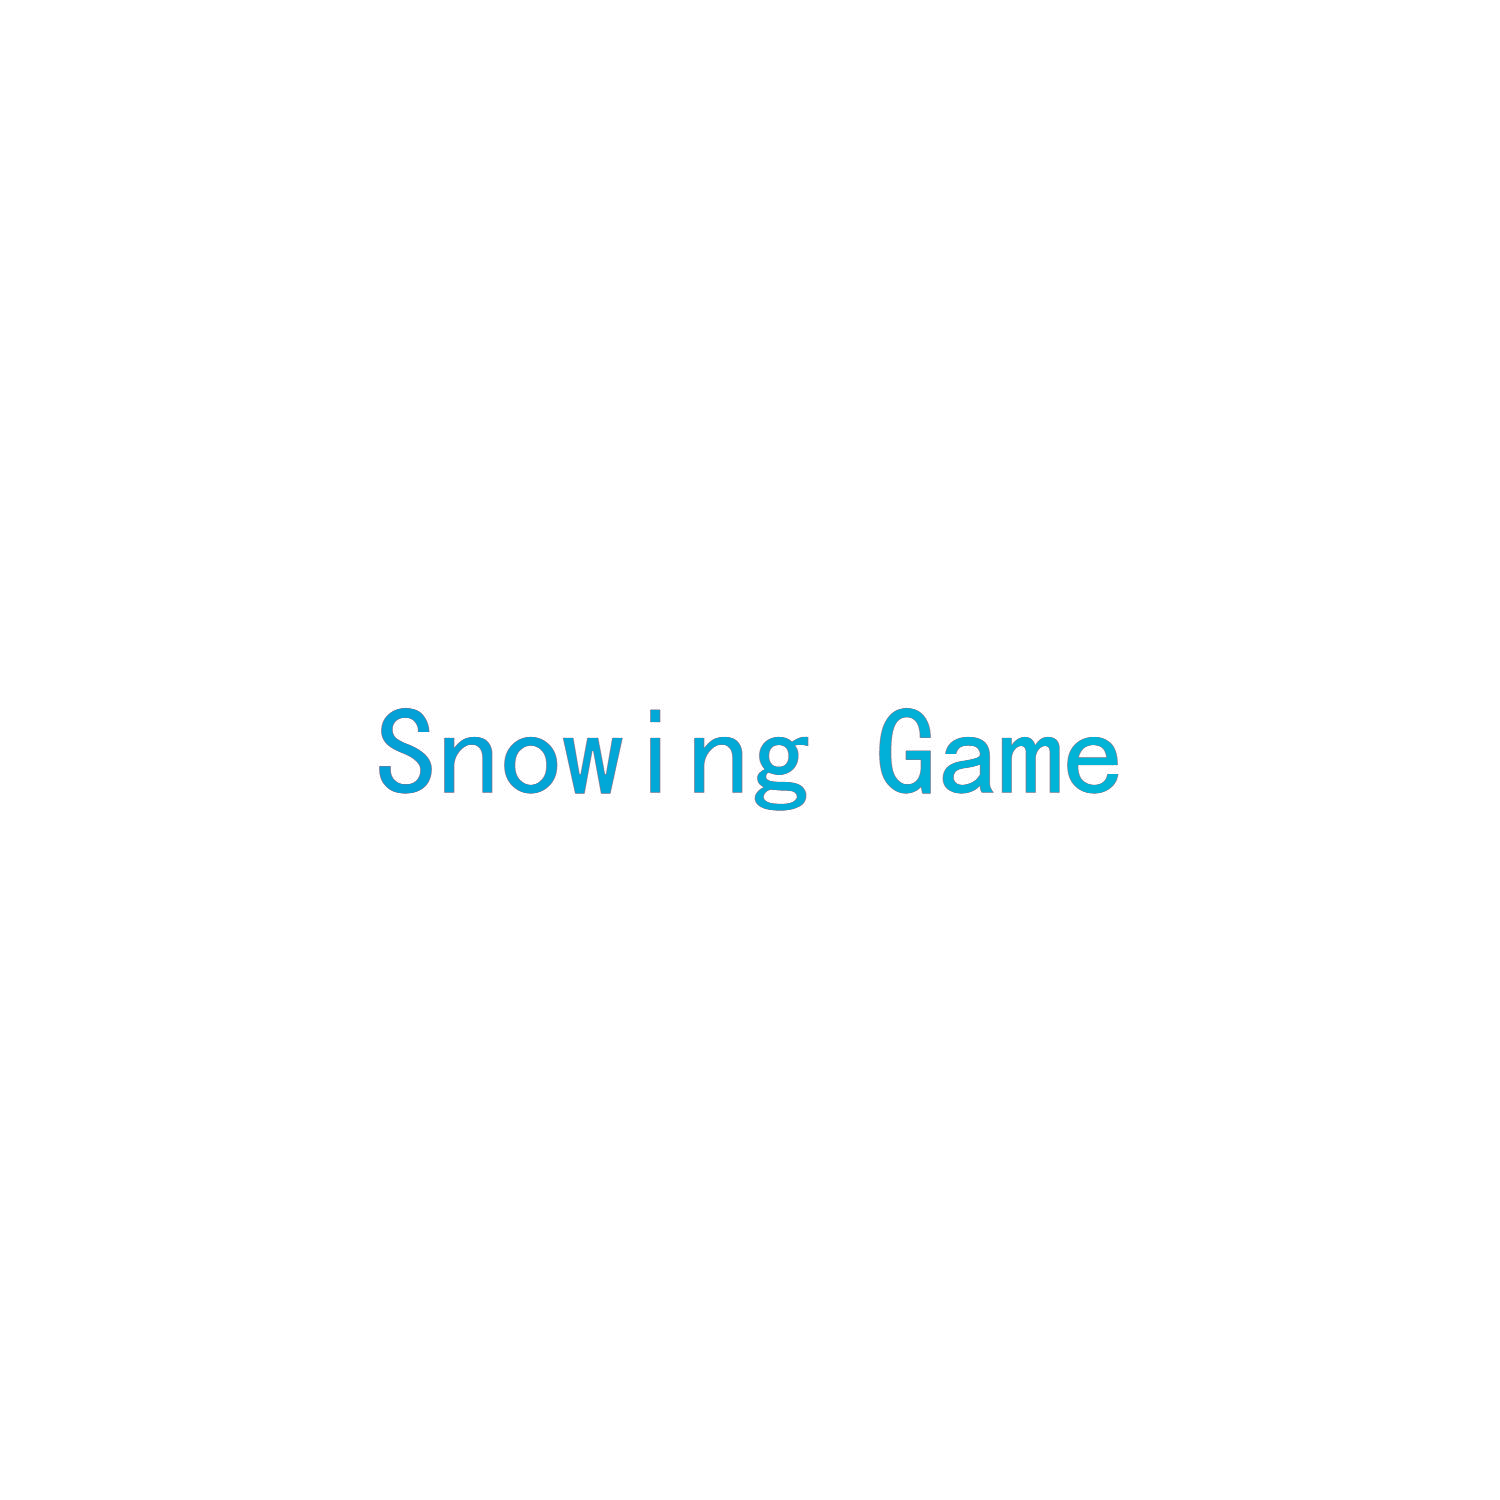 SNOWING GAME